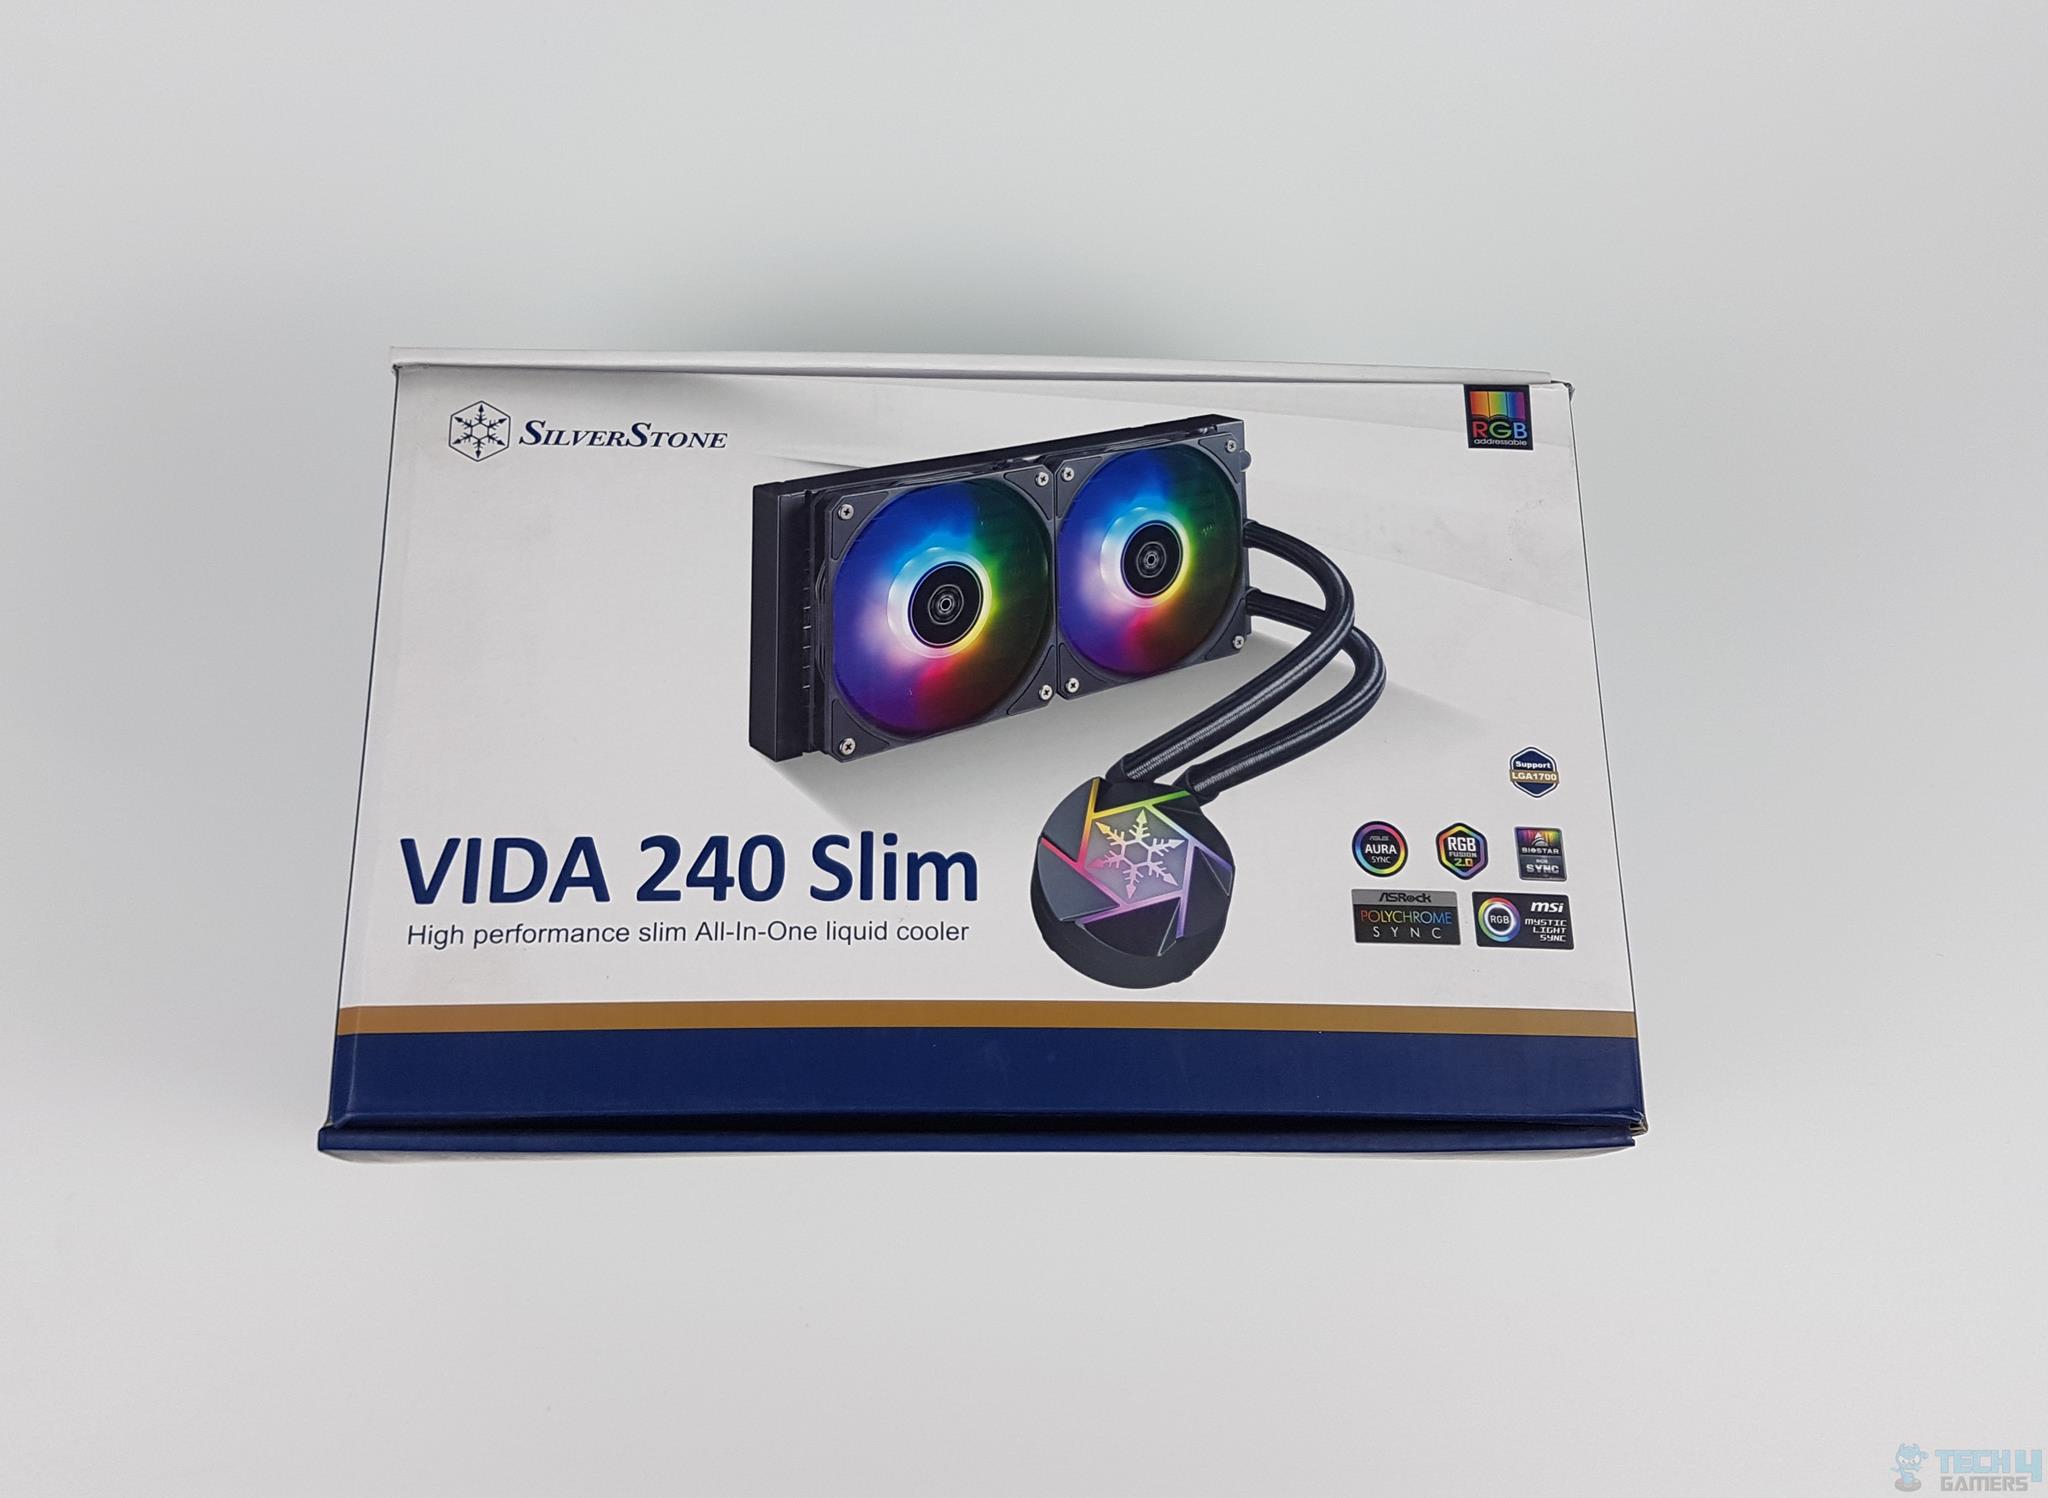 Silverstone SST-VD240-SLIM CPU Liquid Cooler —Packaging